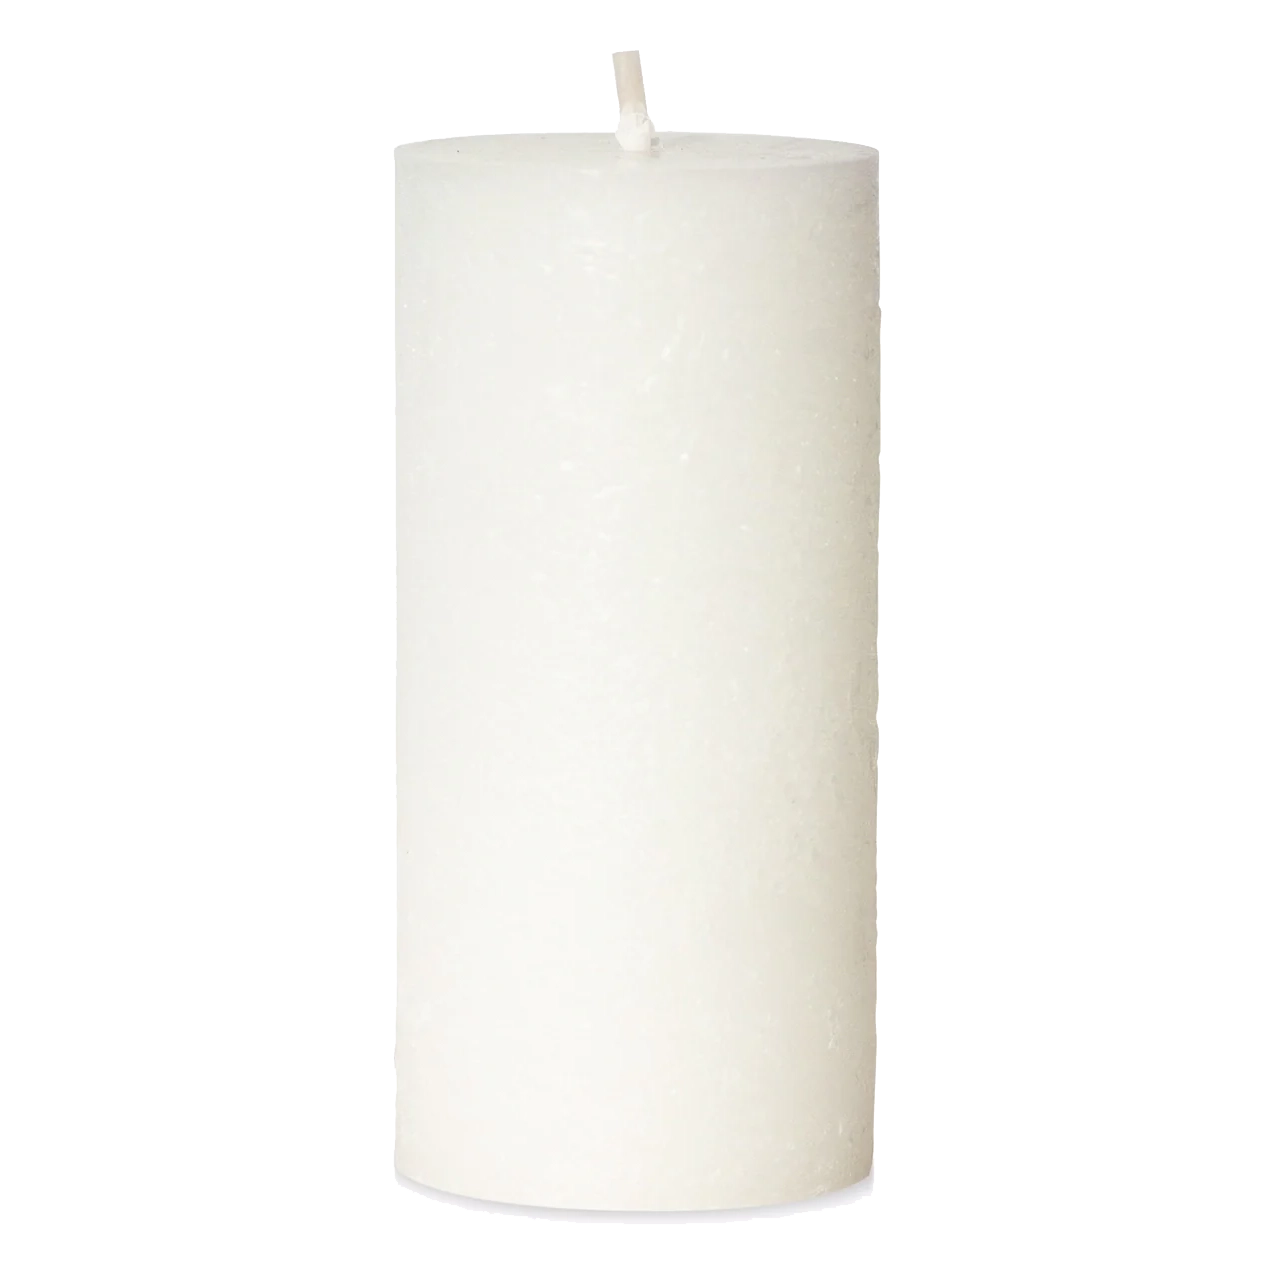 6 inch white pillar candle